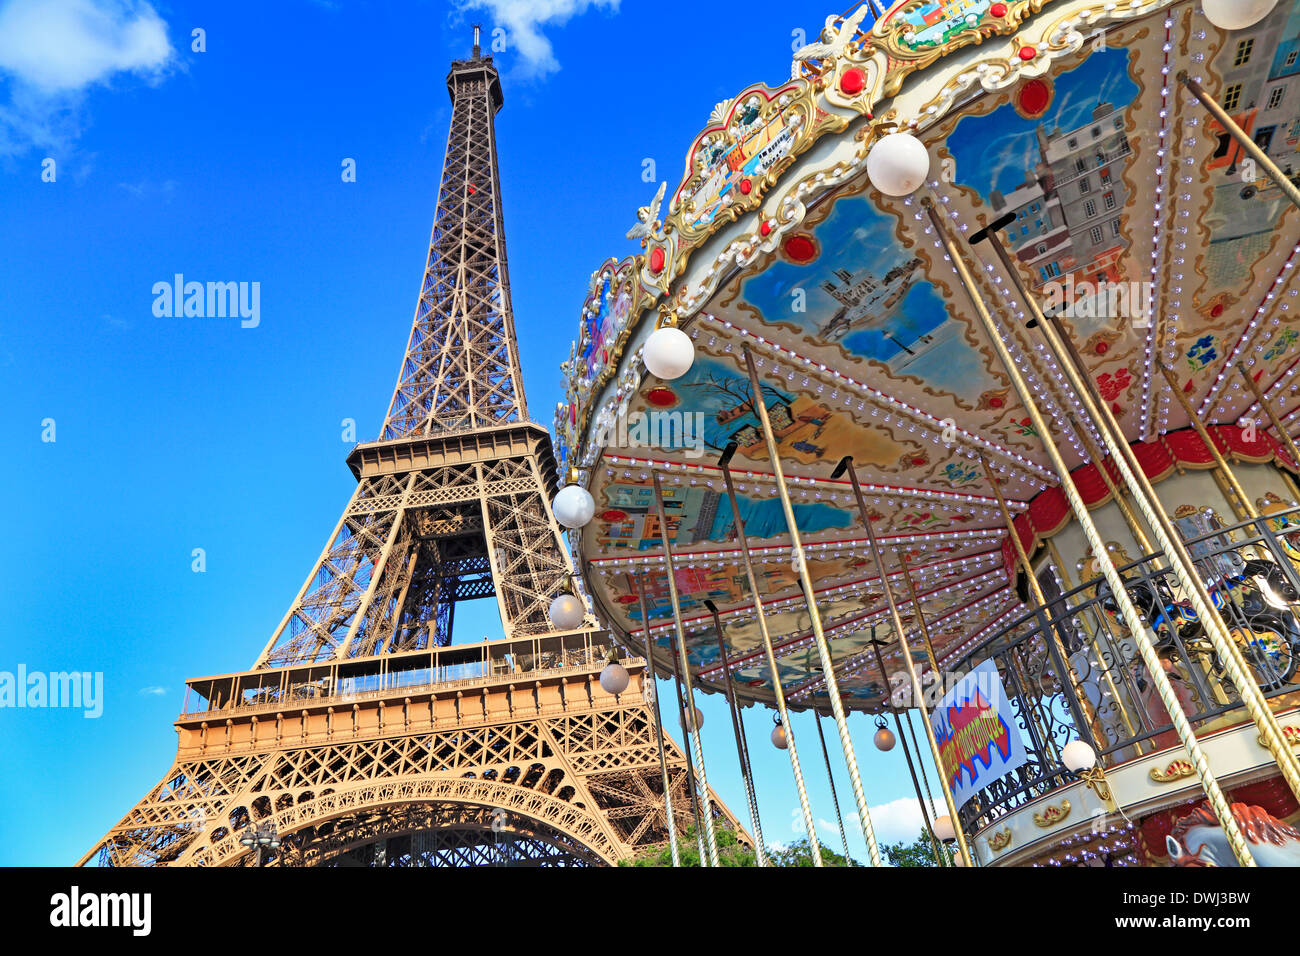 Eiffel Tower, Carousel, France Stock Photo